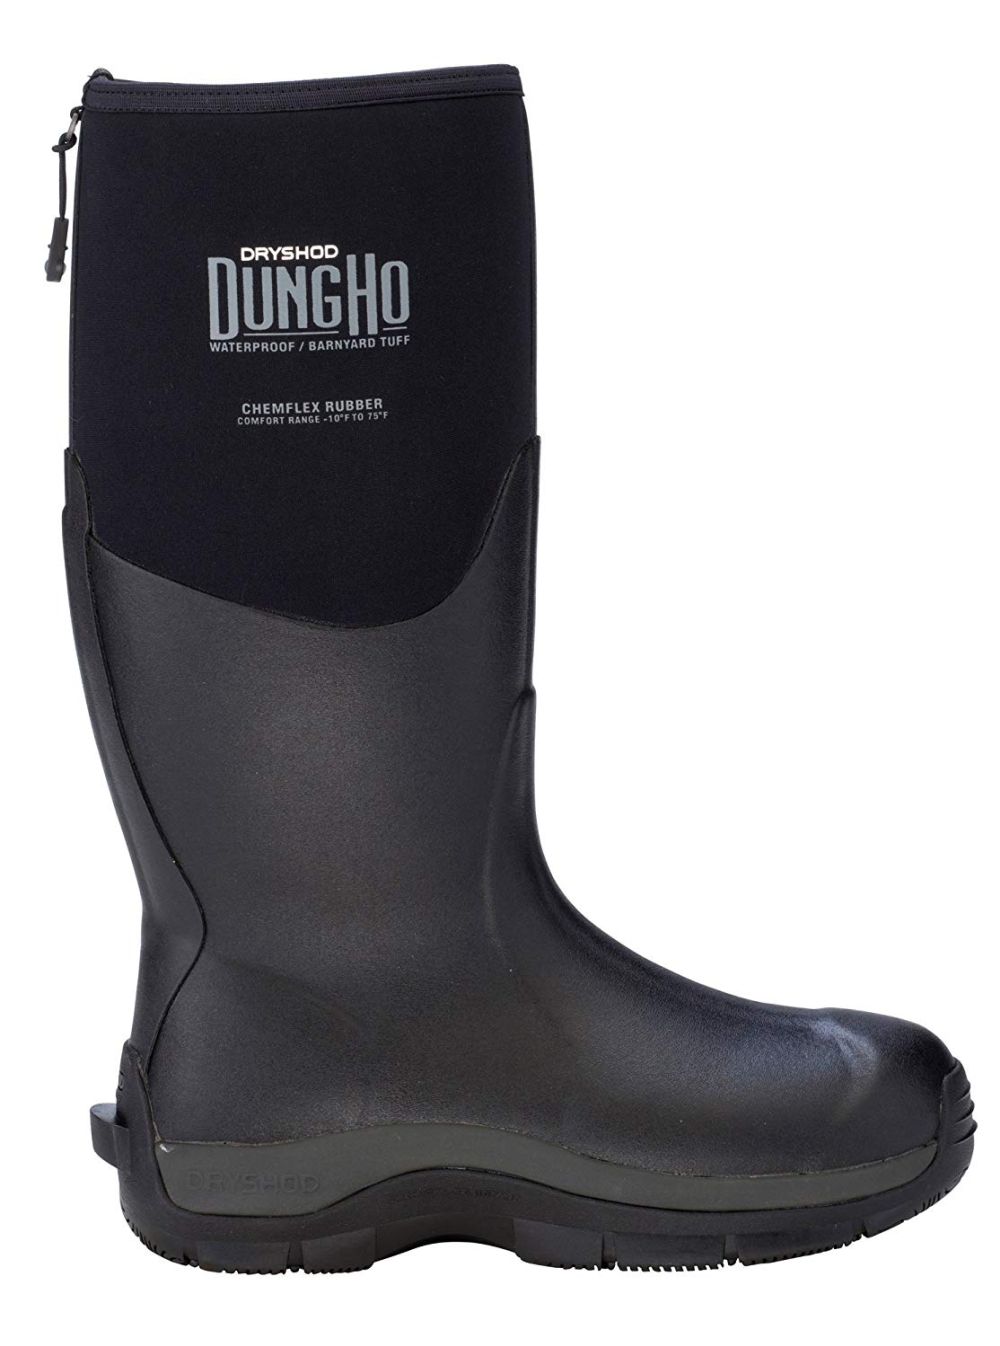 Men's Dryshod DungHo Barnyard High Top Work Boot